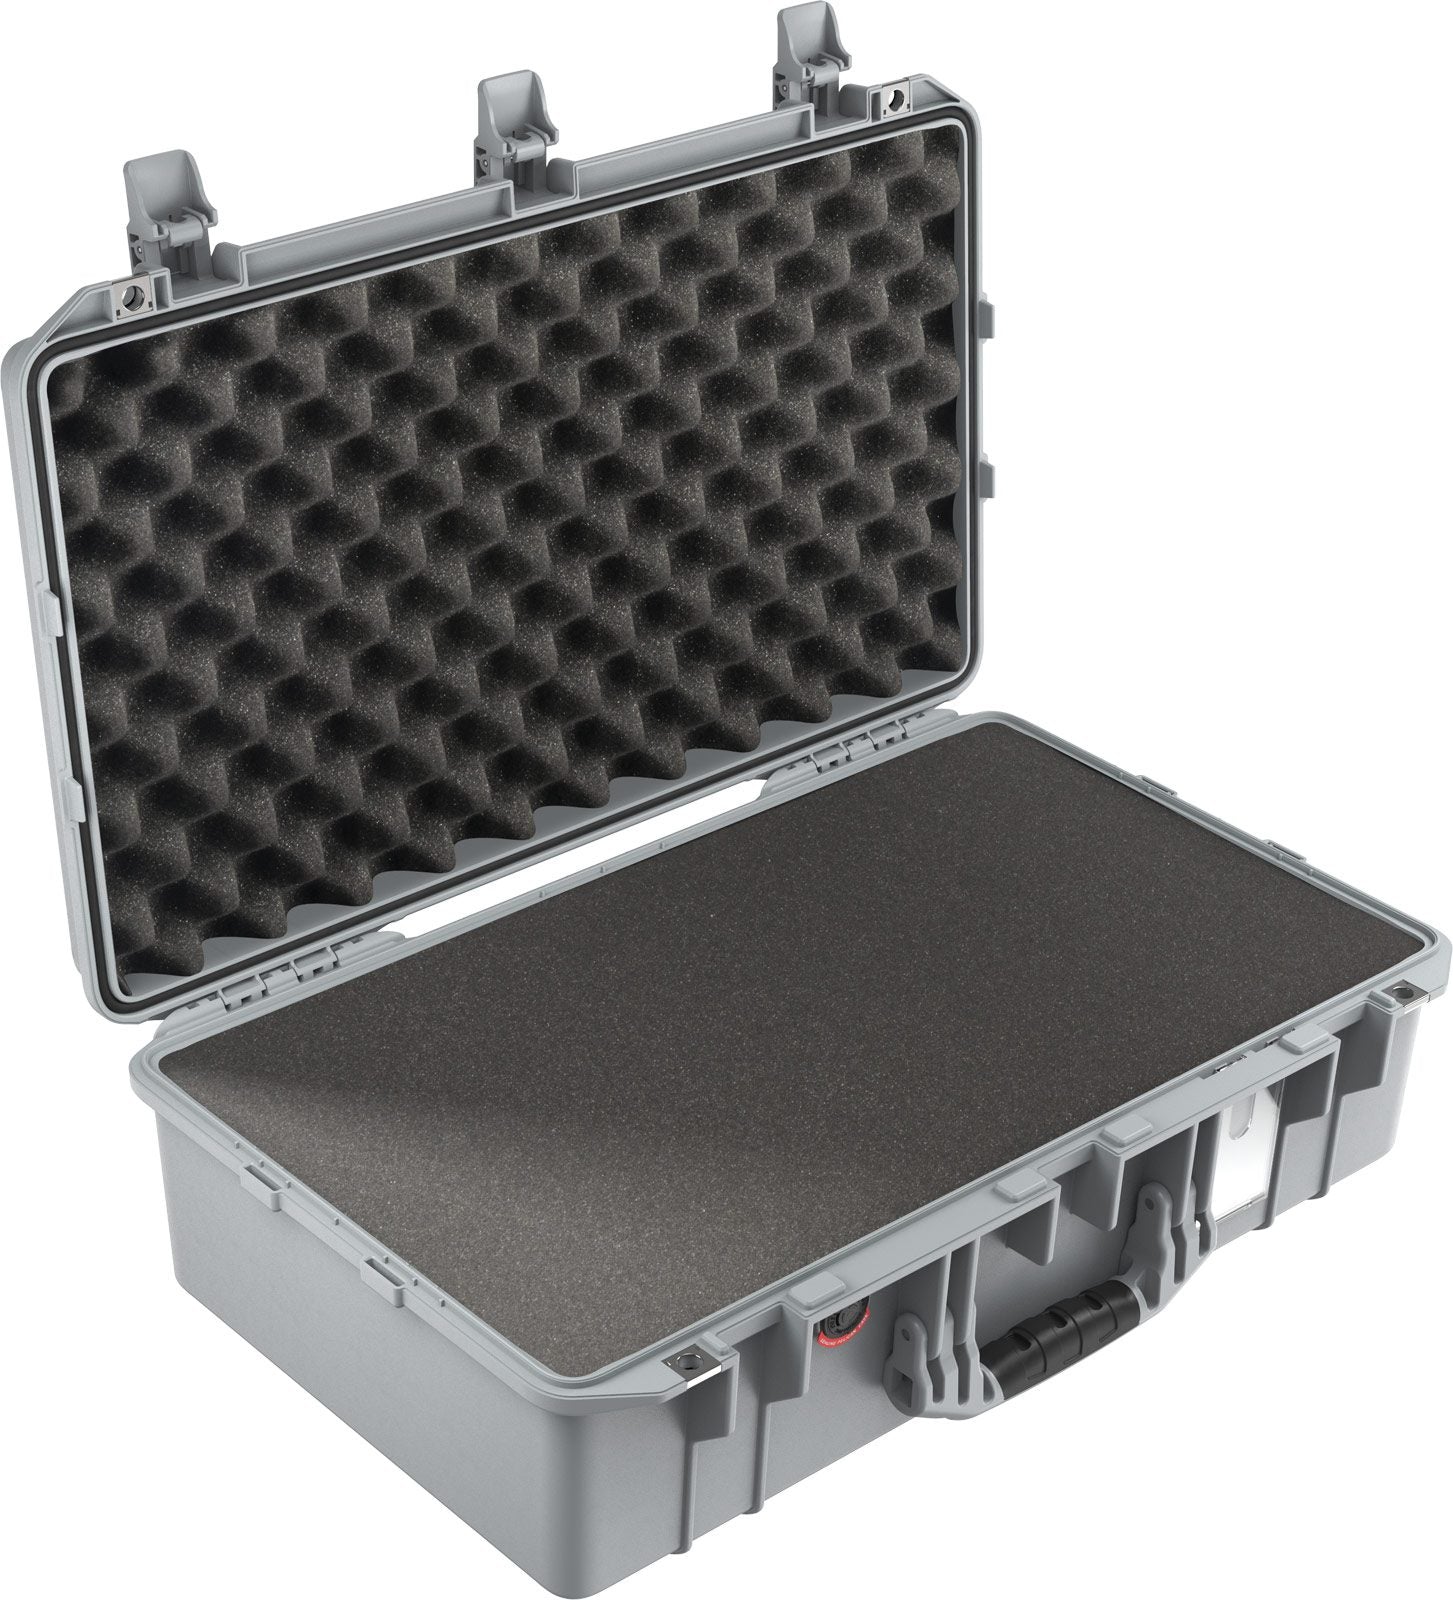 Pelican Products 1555 Air Case - Silver, Foam